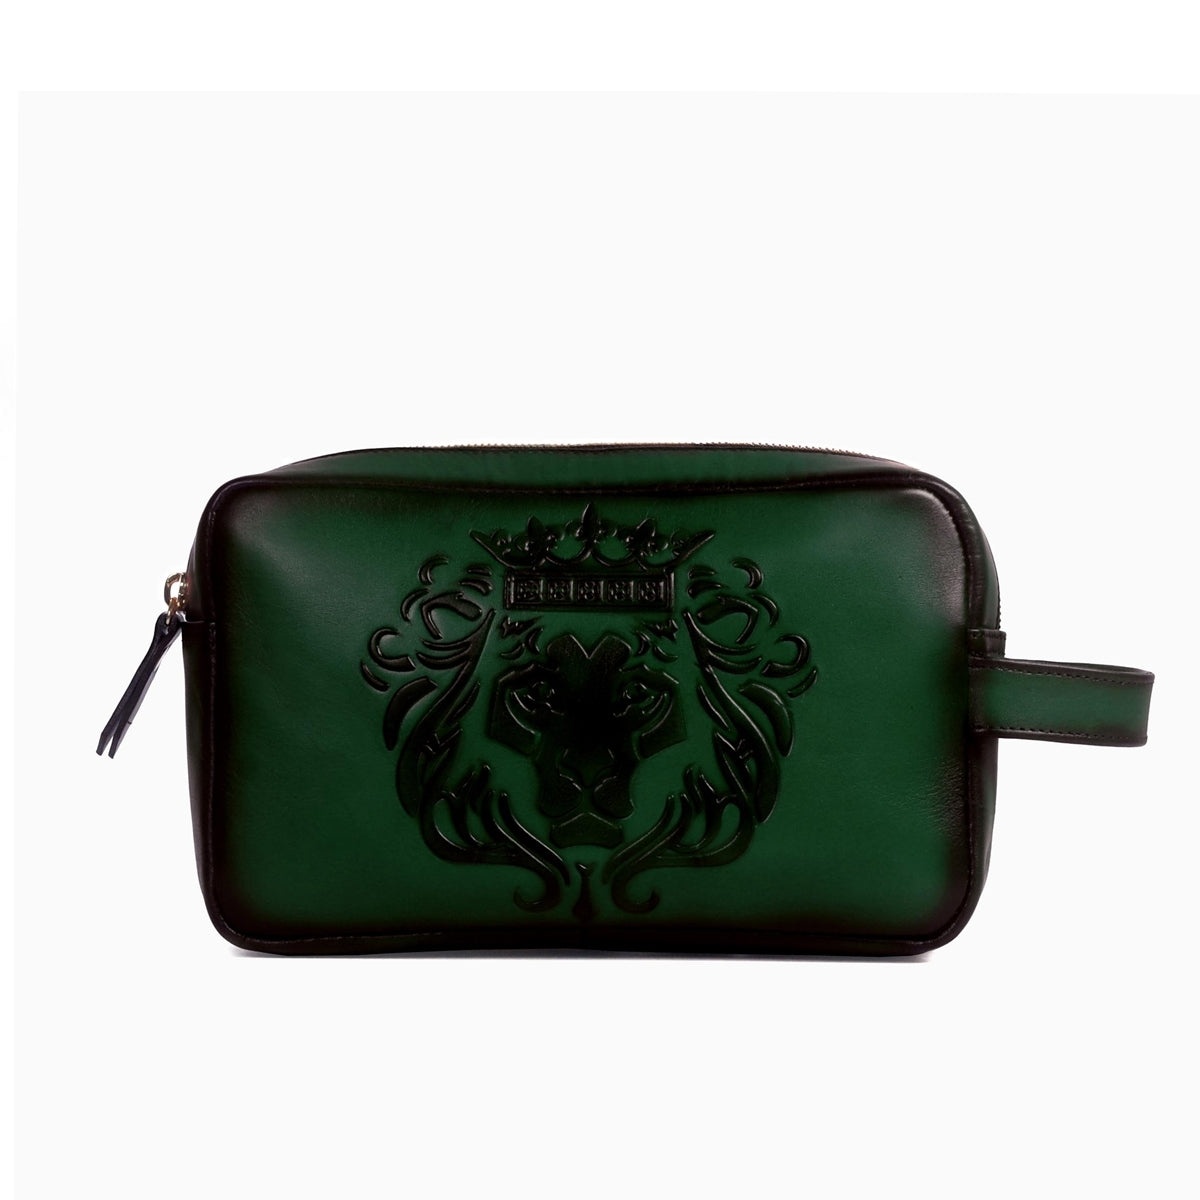 Unisex Green Genuine Leather Embossed Lion Slim Kit Bag for Travel by Brune & Bareskin